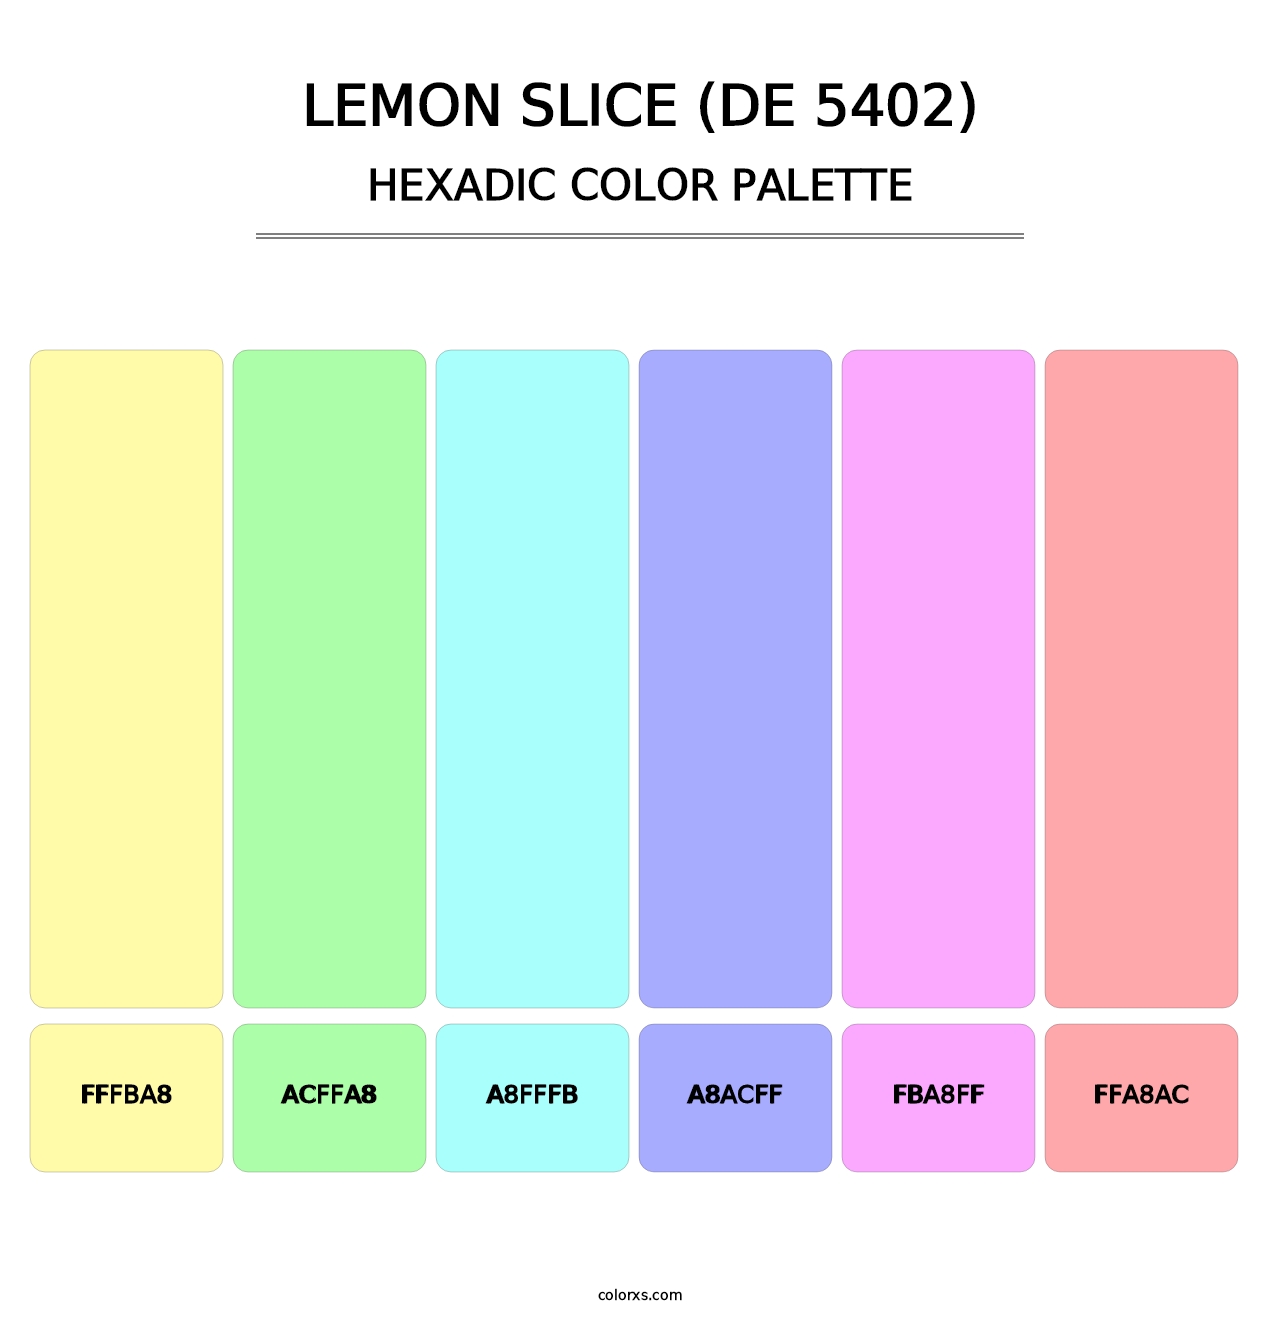 Lemon Slice (DE 5402) - Hexadic Color Palette